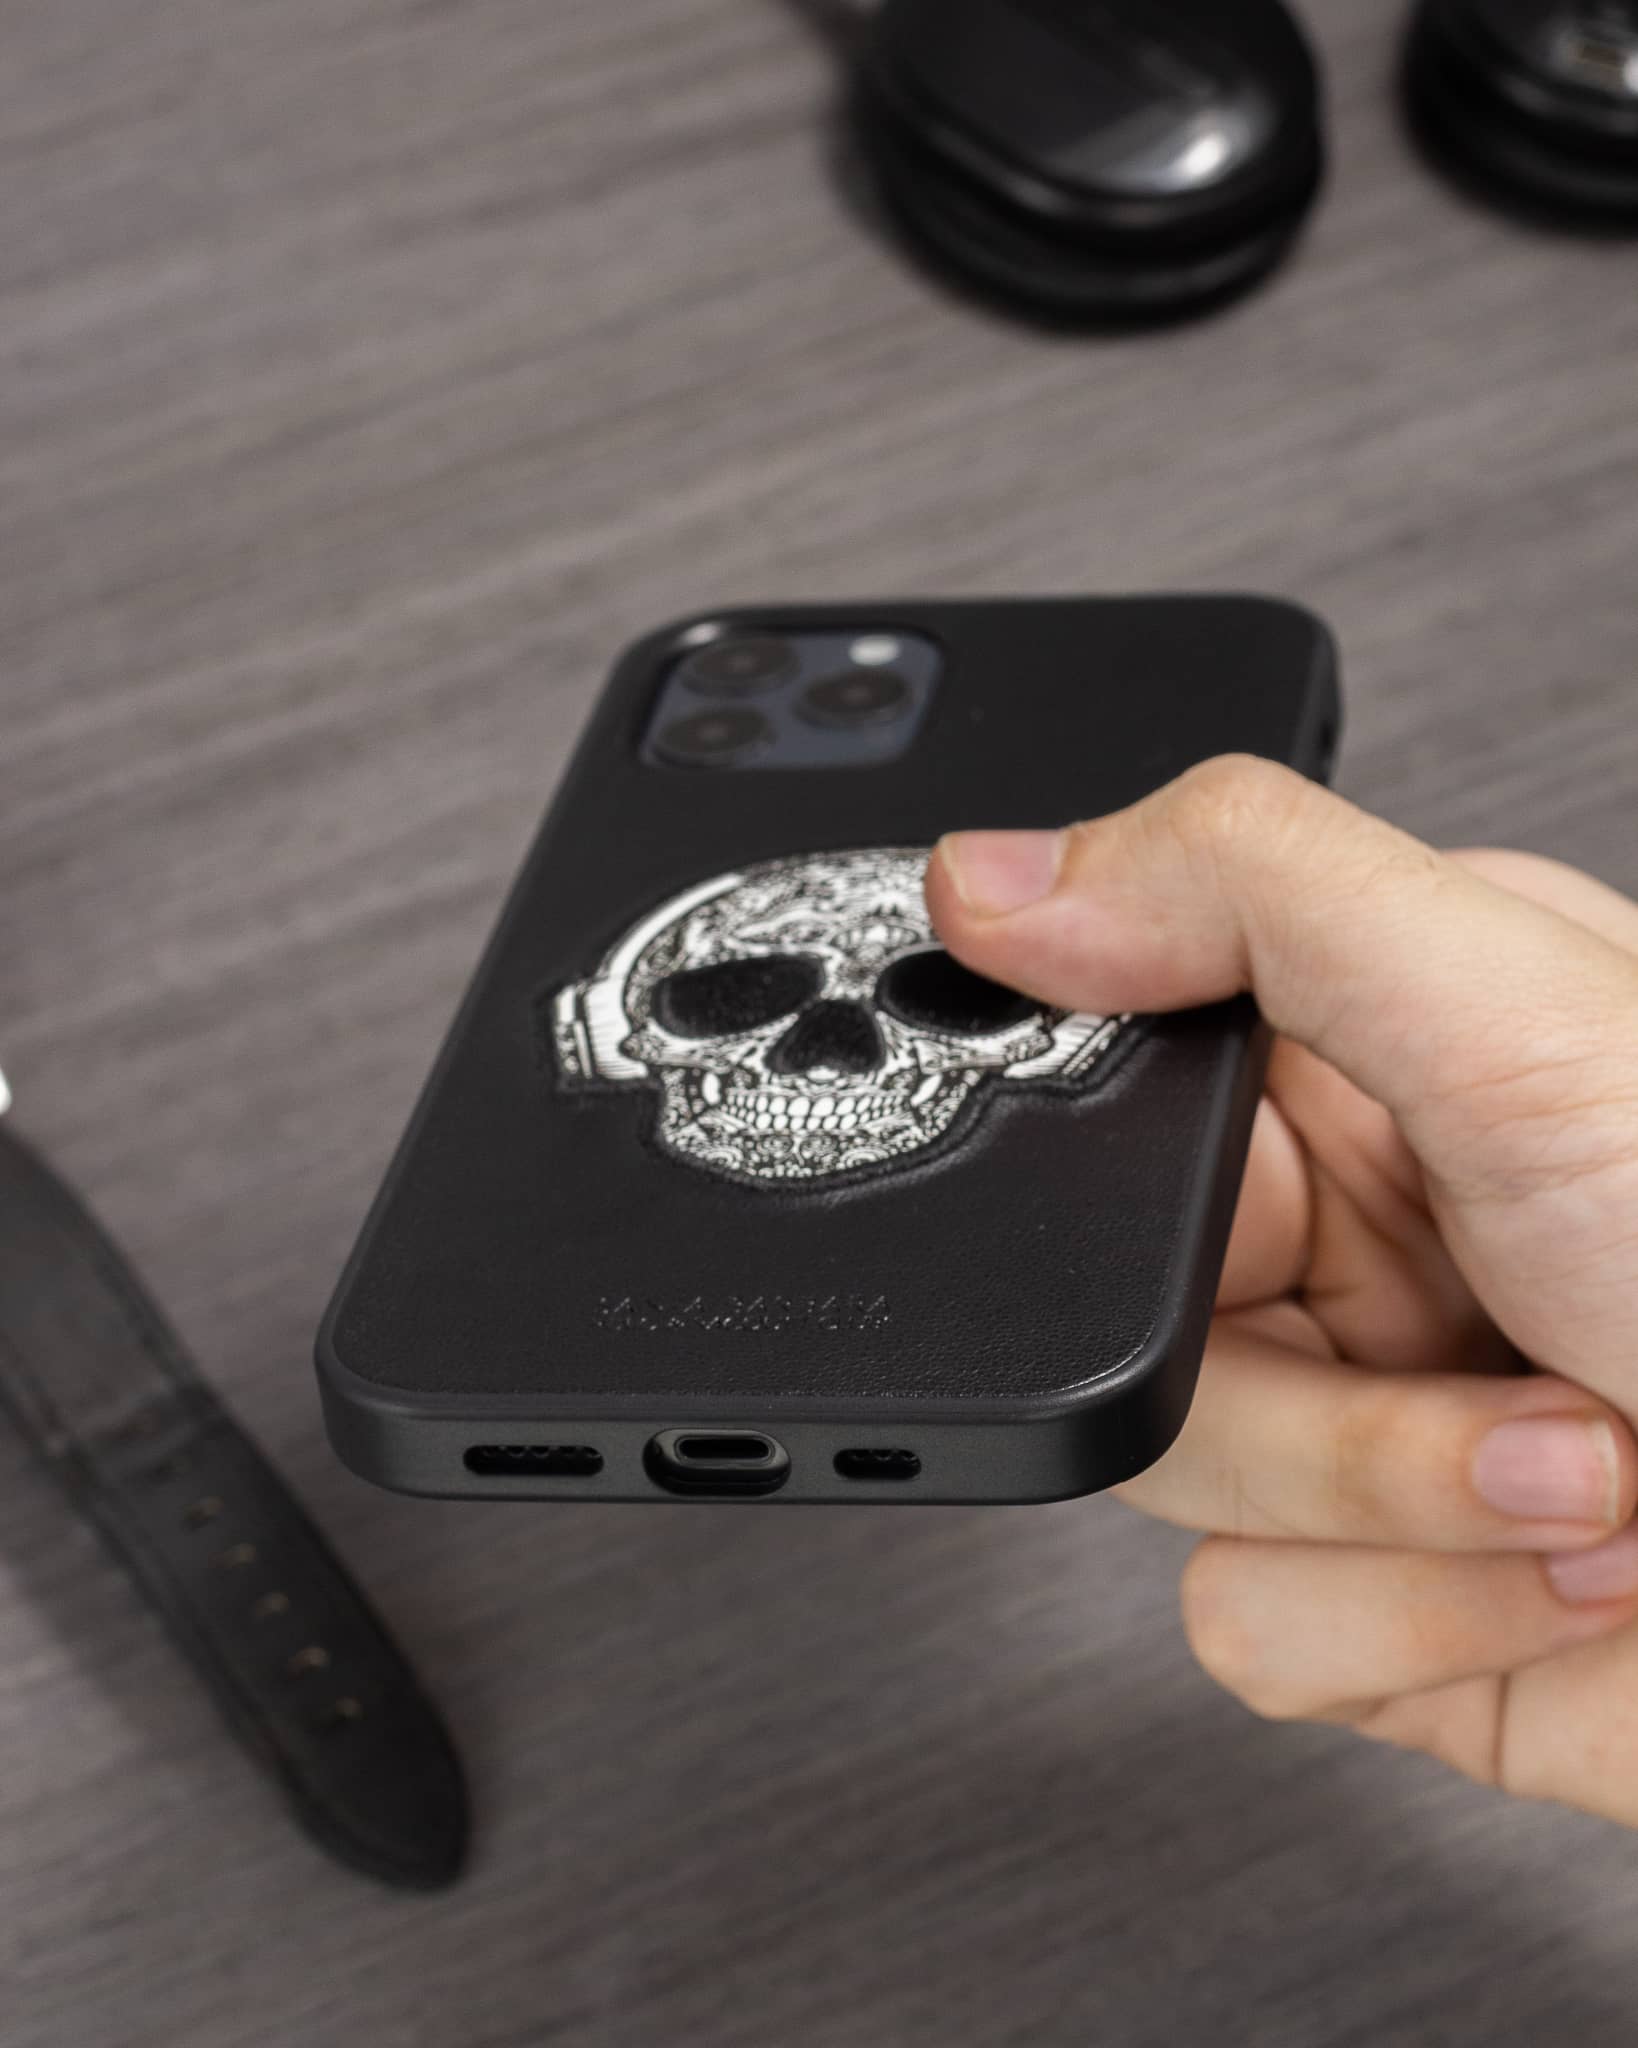 Santa Skull Case iPhone 12 Pro Max